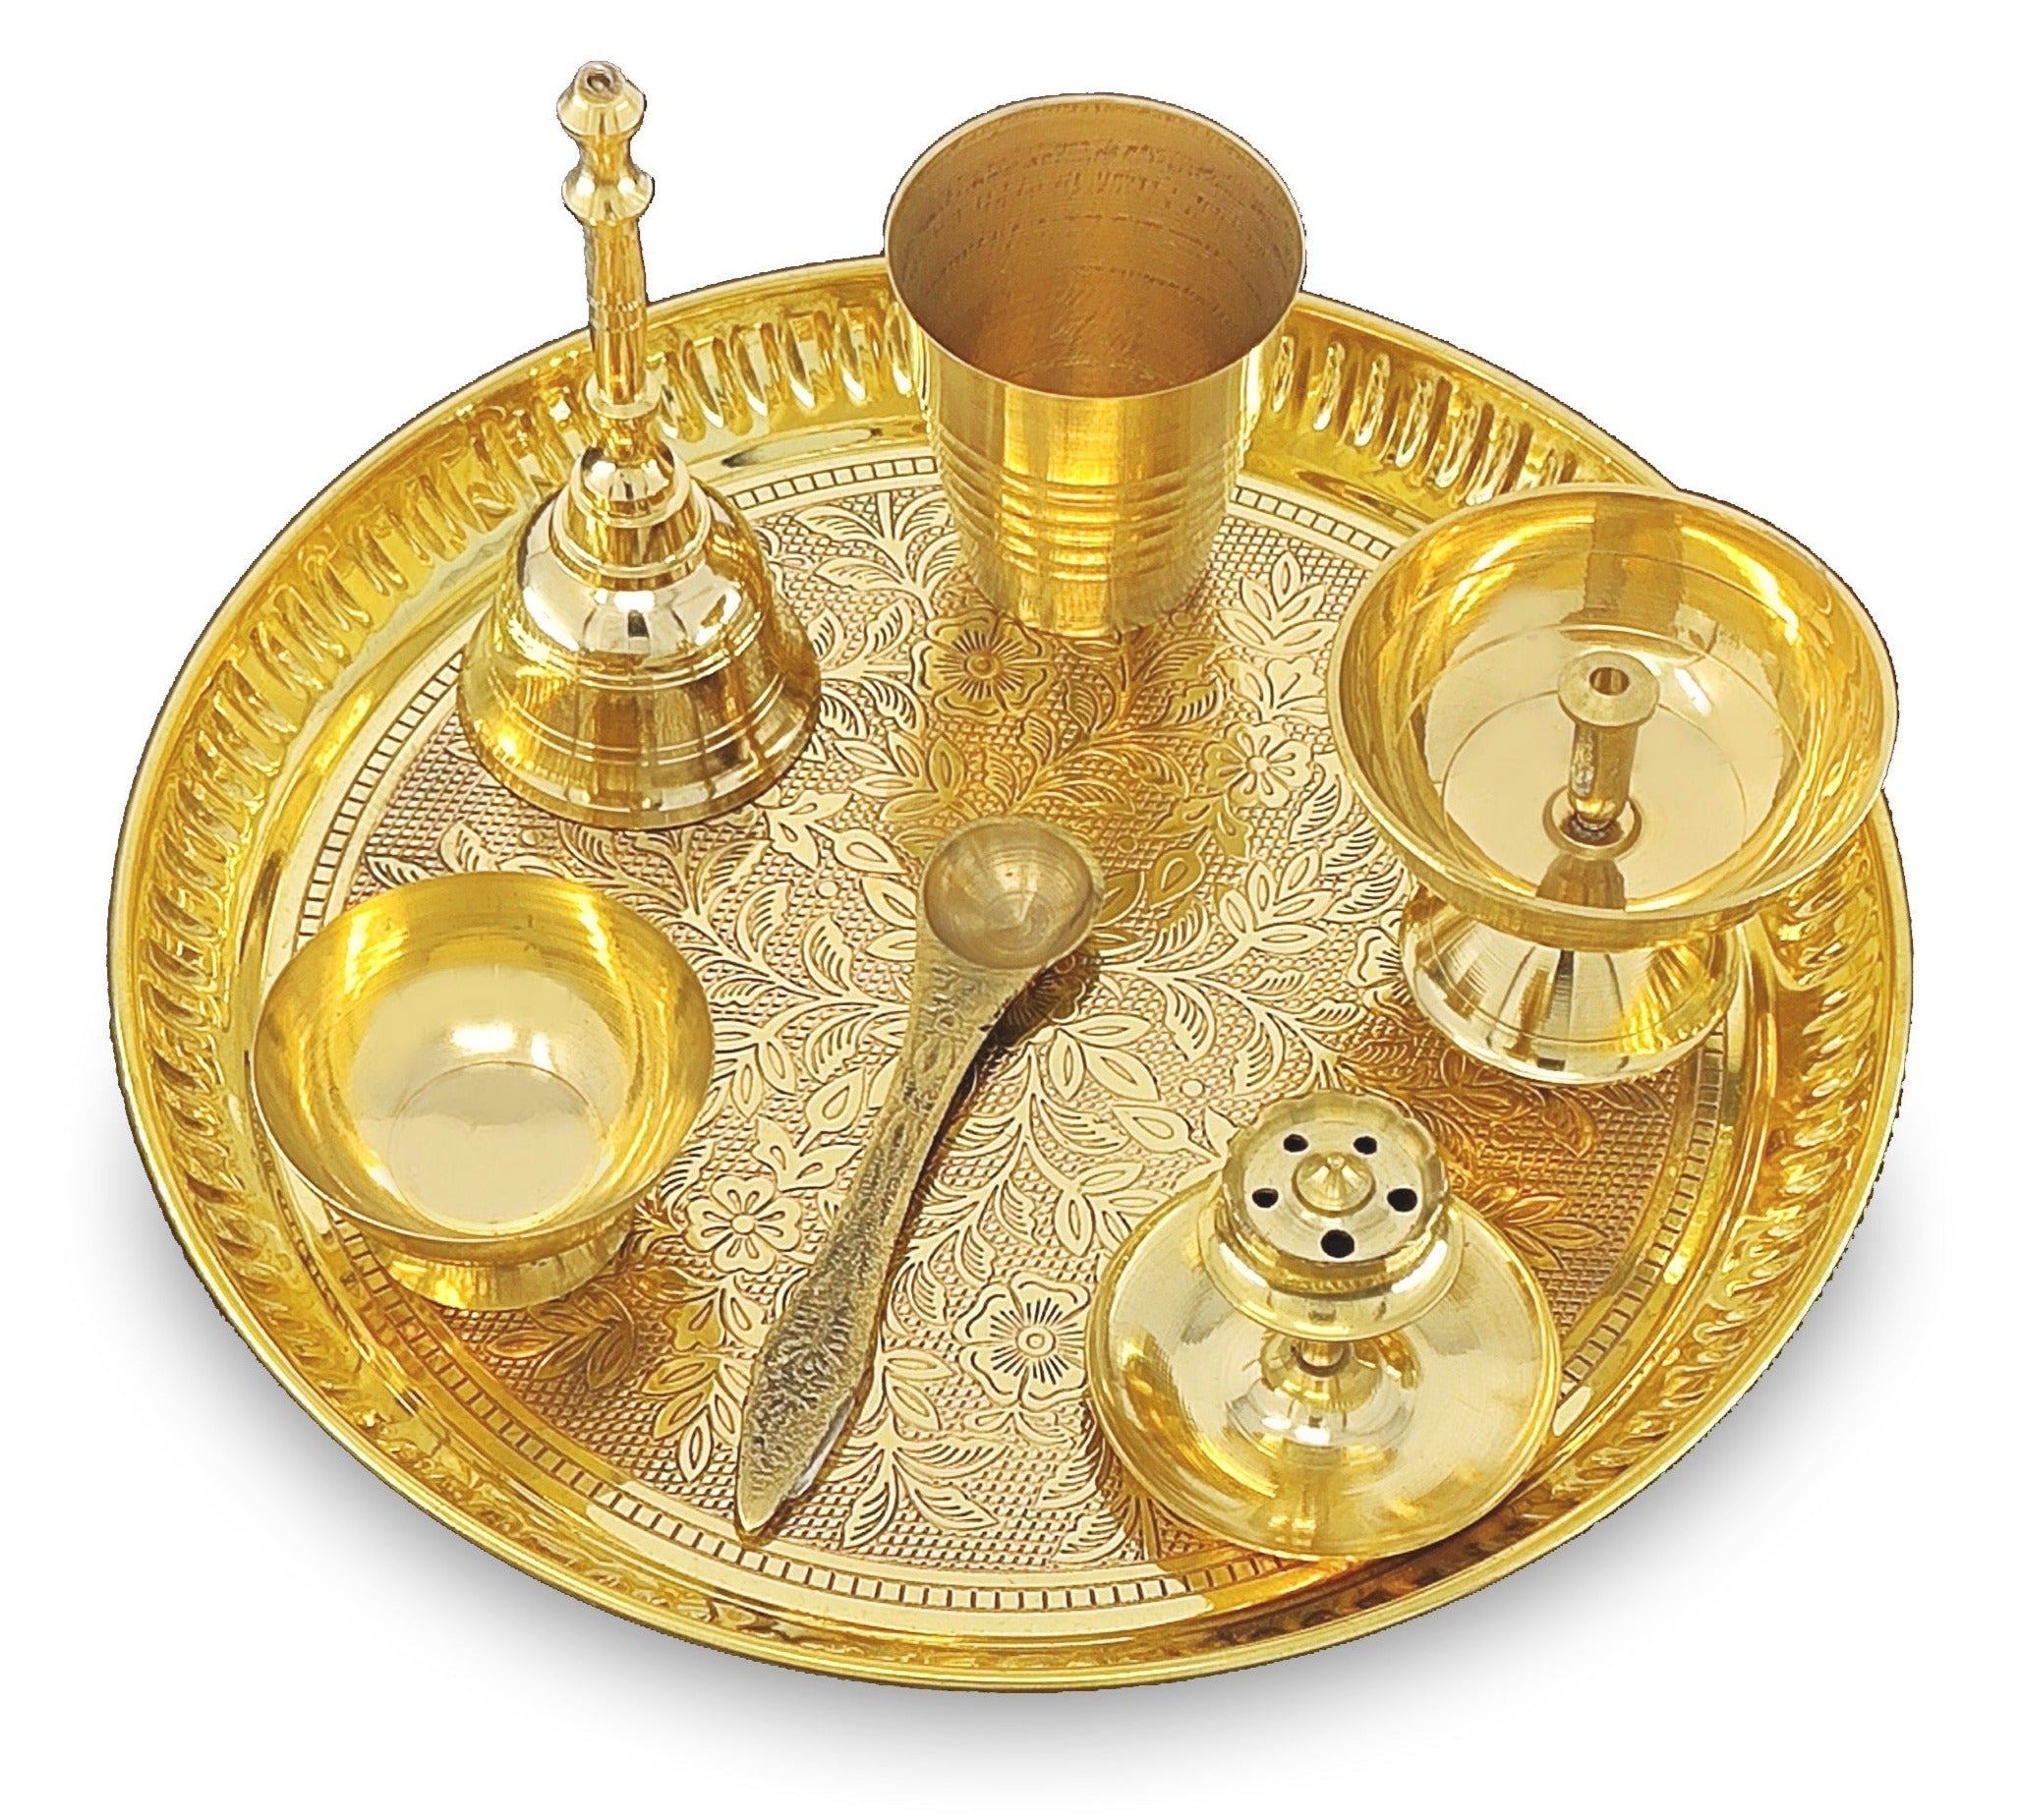 BENGALEN Brass Pooja Thali Set 8 Inch Puja Thali with Pital Plate Glass Piyali Diya Dhup Dan Chandan Wati Ghanti Palli for Diwali Home Office Mandir Wedding Return Gift Items